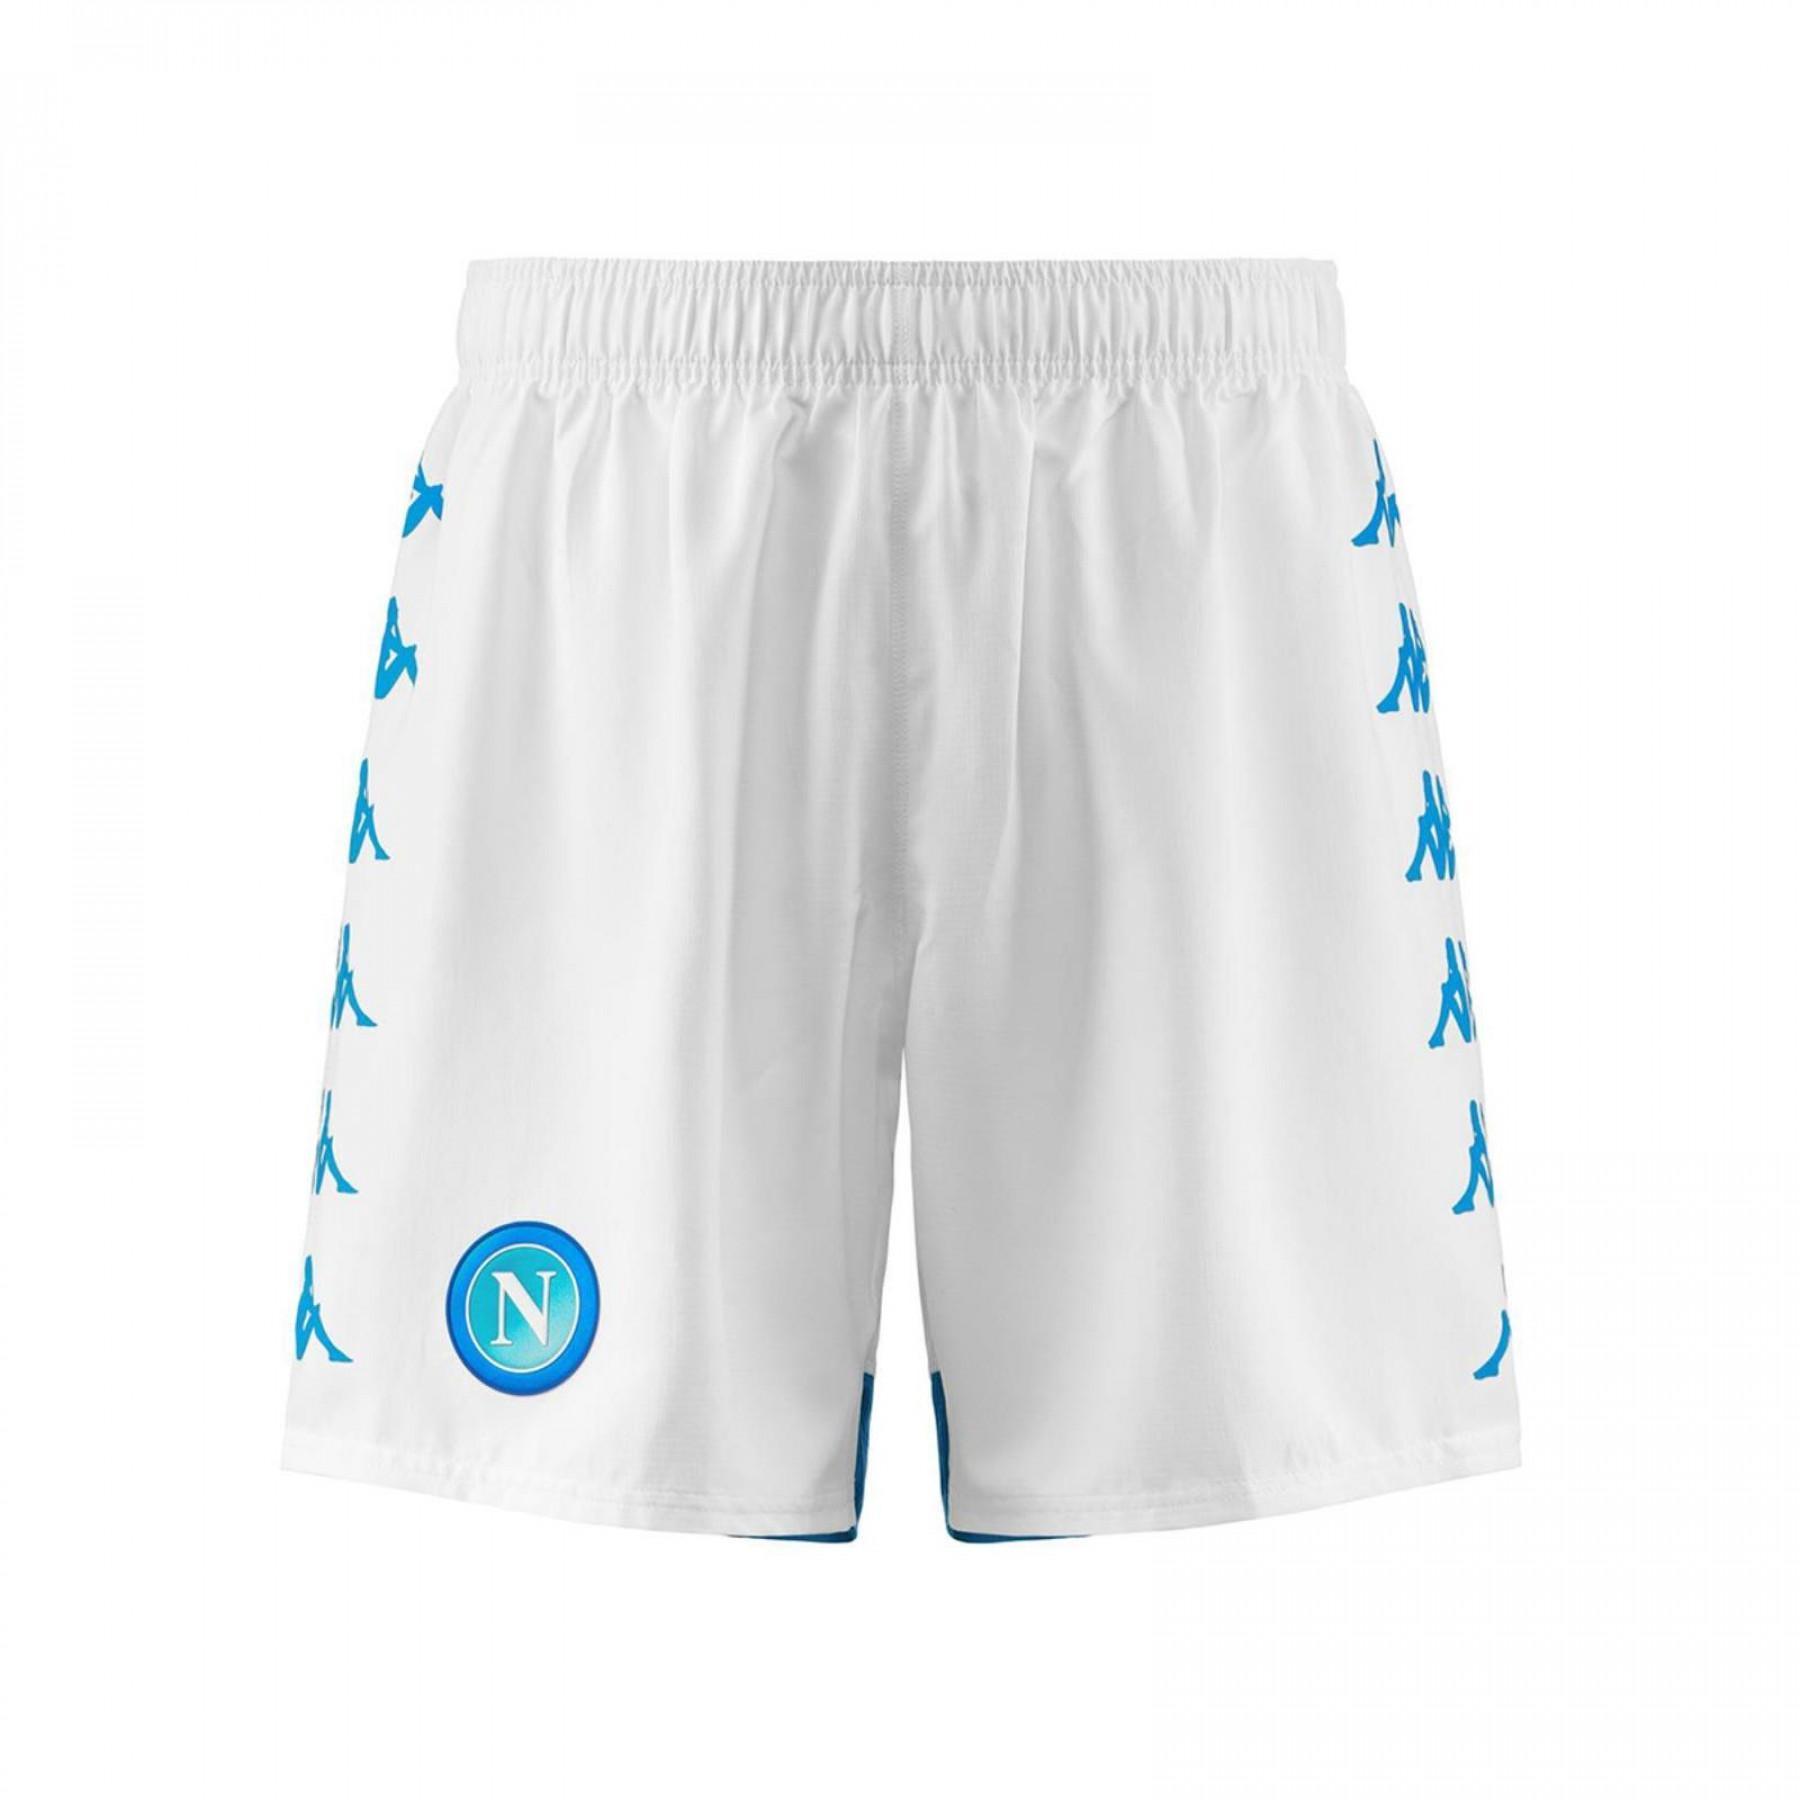 Pantalones cortos para el hogar SSC Napoli blanc 2018/19